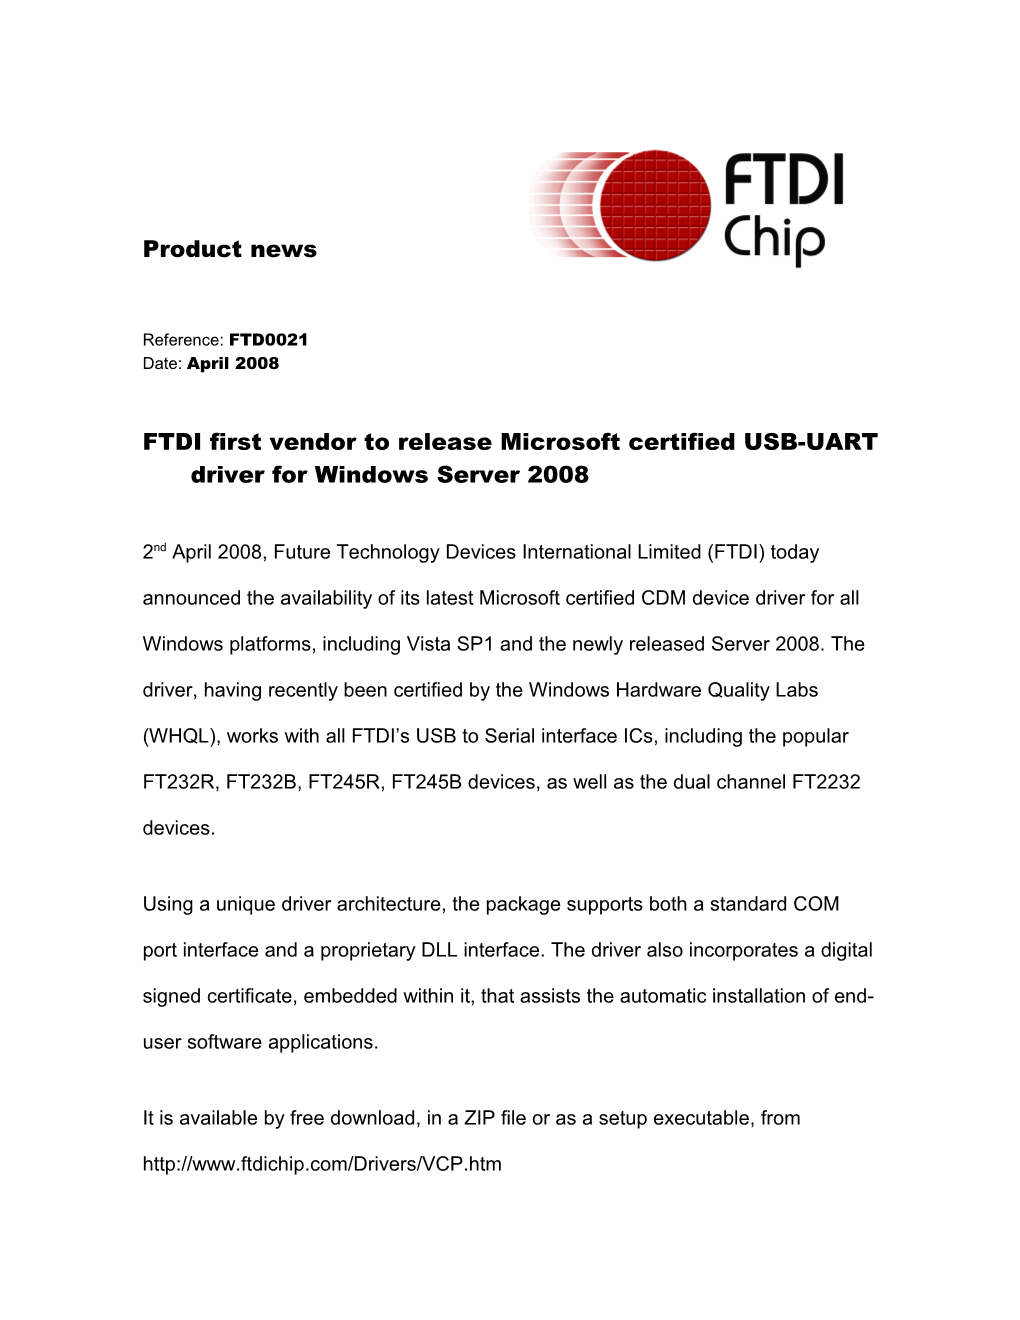 FTDI First Vendor to Release Microsoft Certified USB-UART Driver for Windows Server 2008